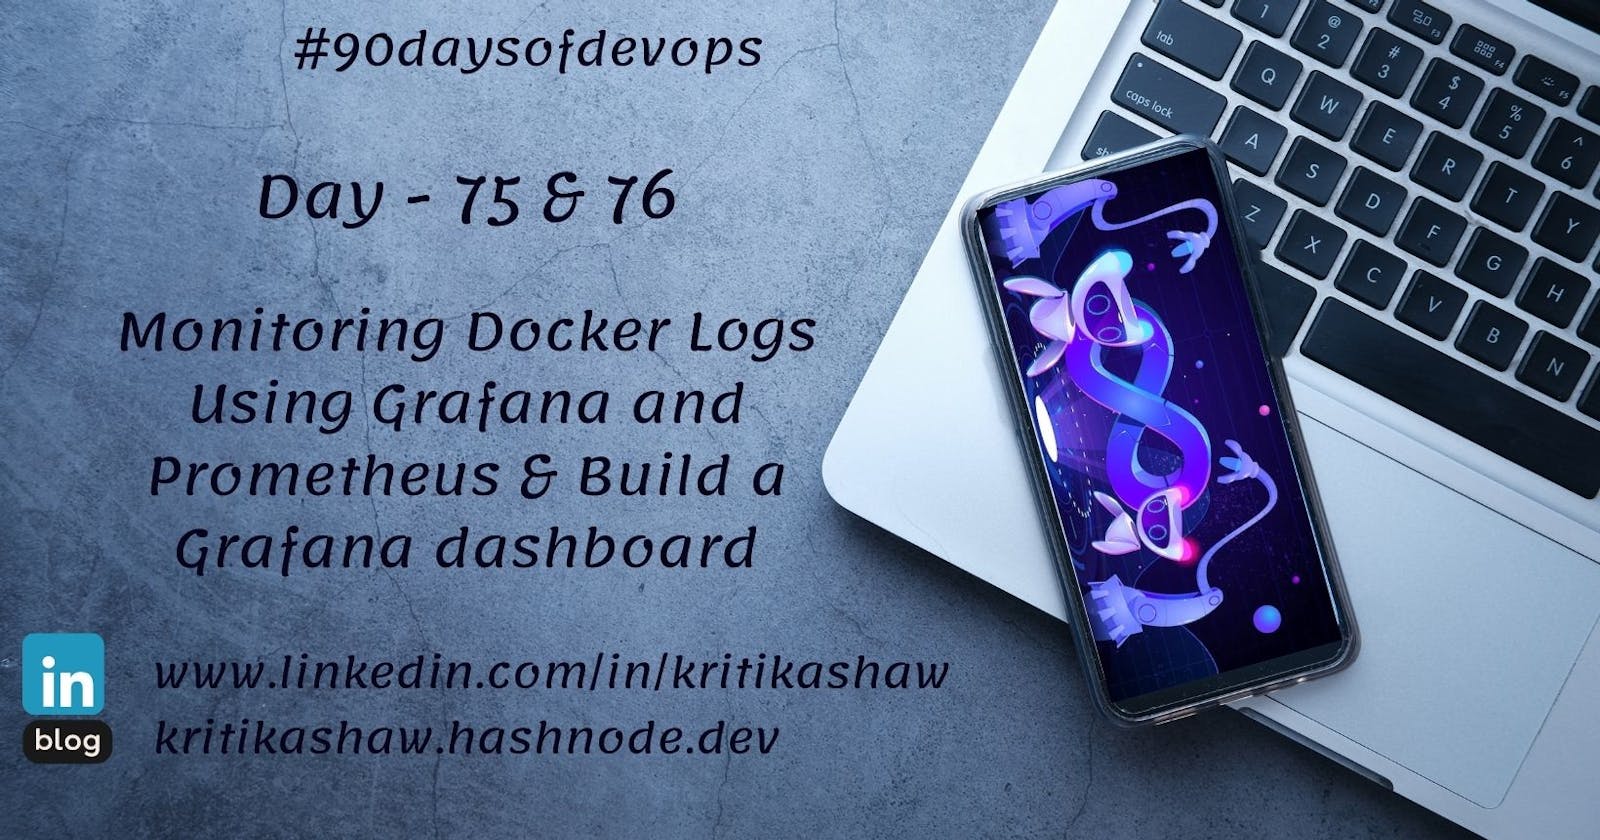 Day 75 & 76  Monitoring Docker Logs Using Grafana and Prometheus & Build a Grafana dashboard